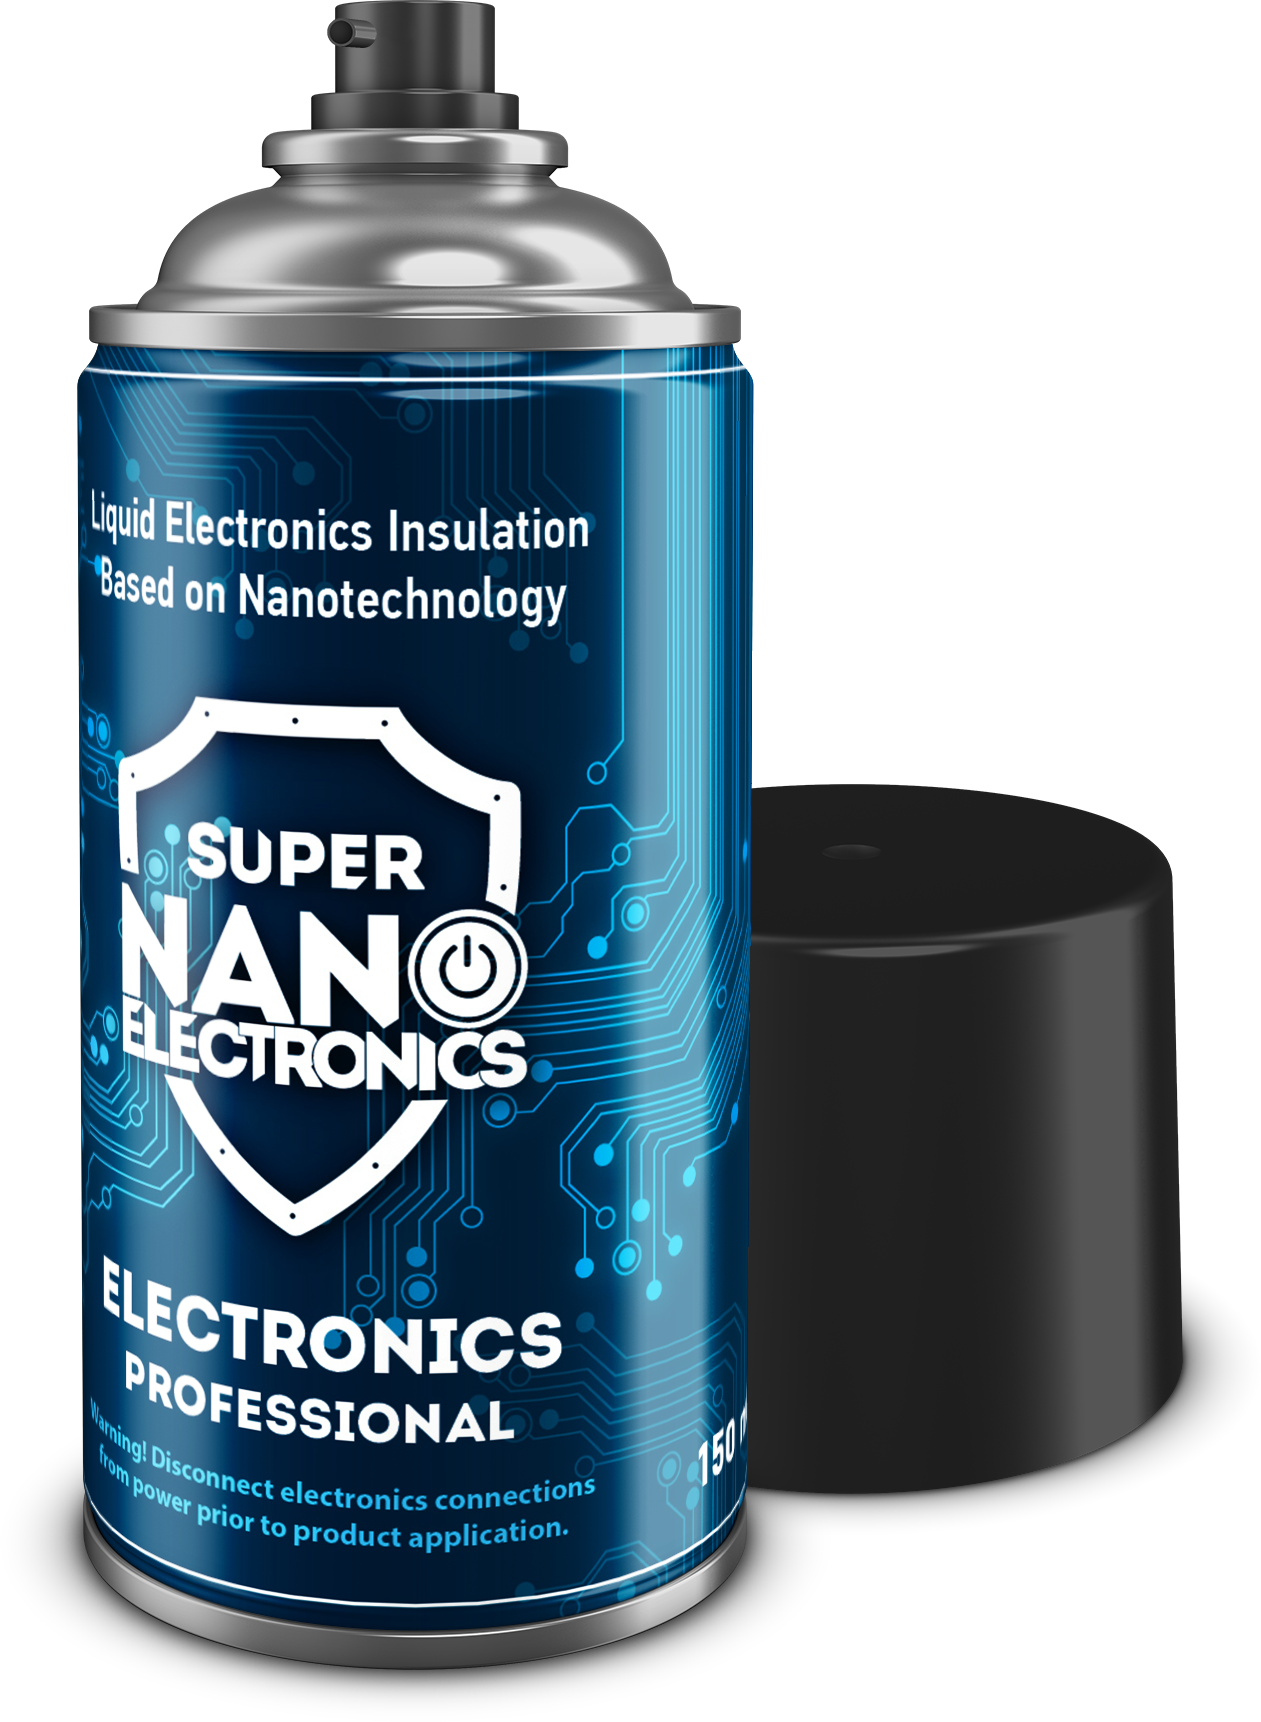 Nanoprotech Electronics Professional 150ml